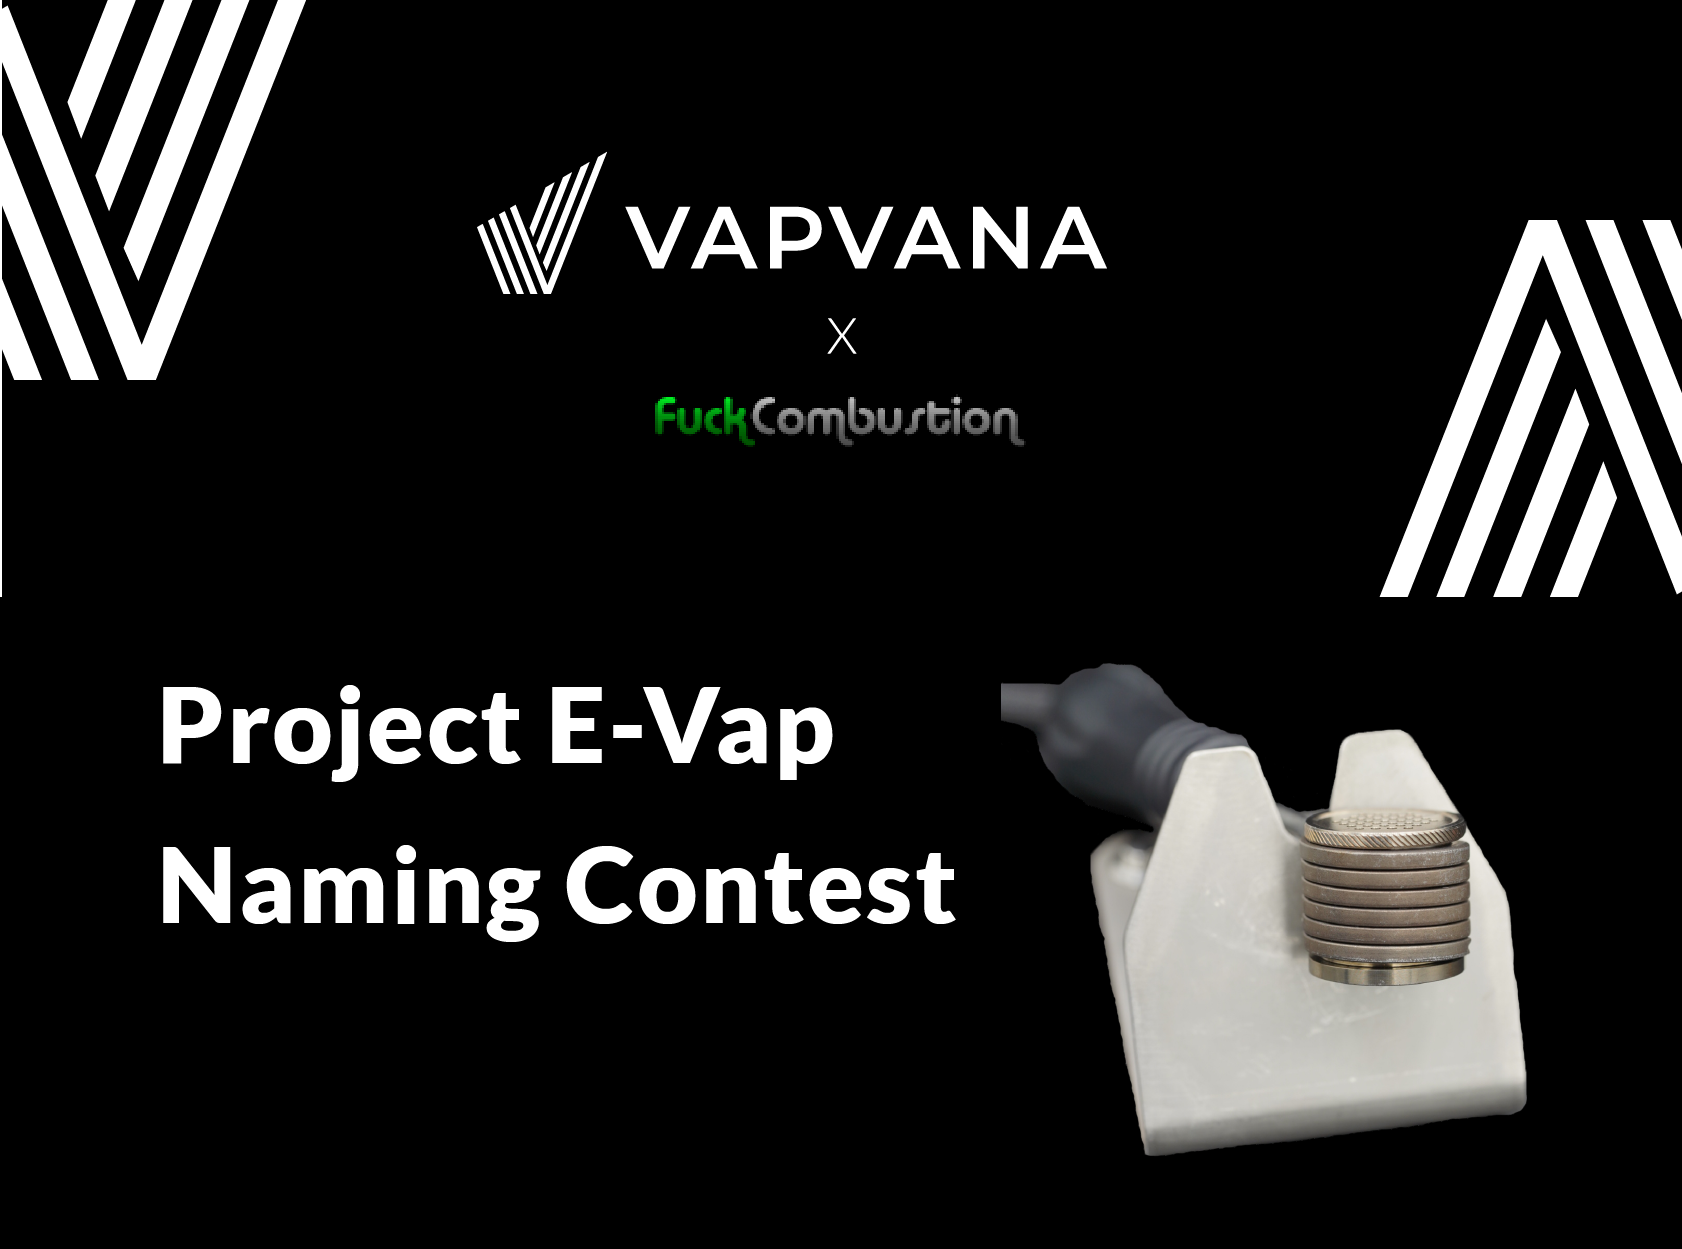 vapvana-x-fc-naming-contest-banner-draft_2x_8d85b012-a561-4315-95d2-41d1804bdaae.png